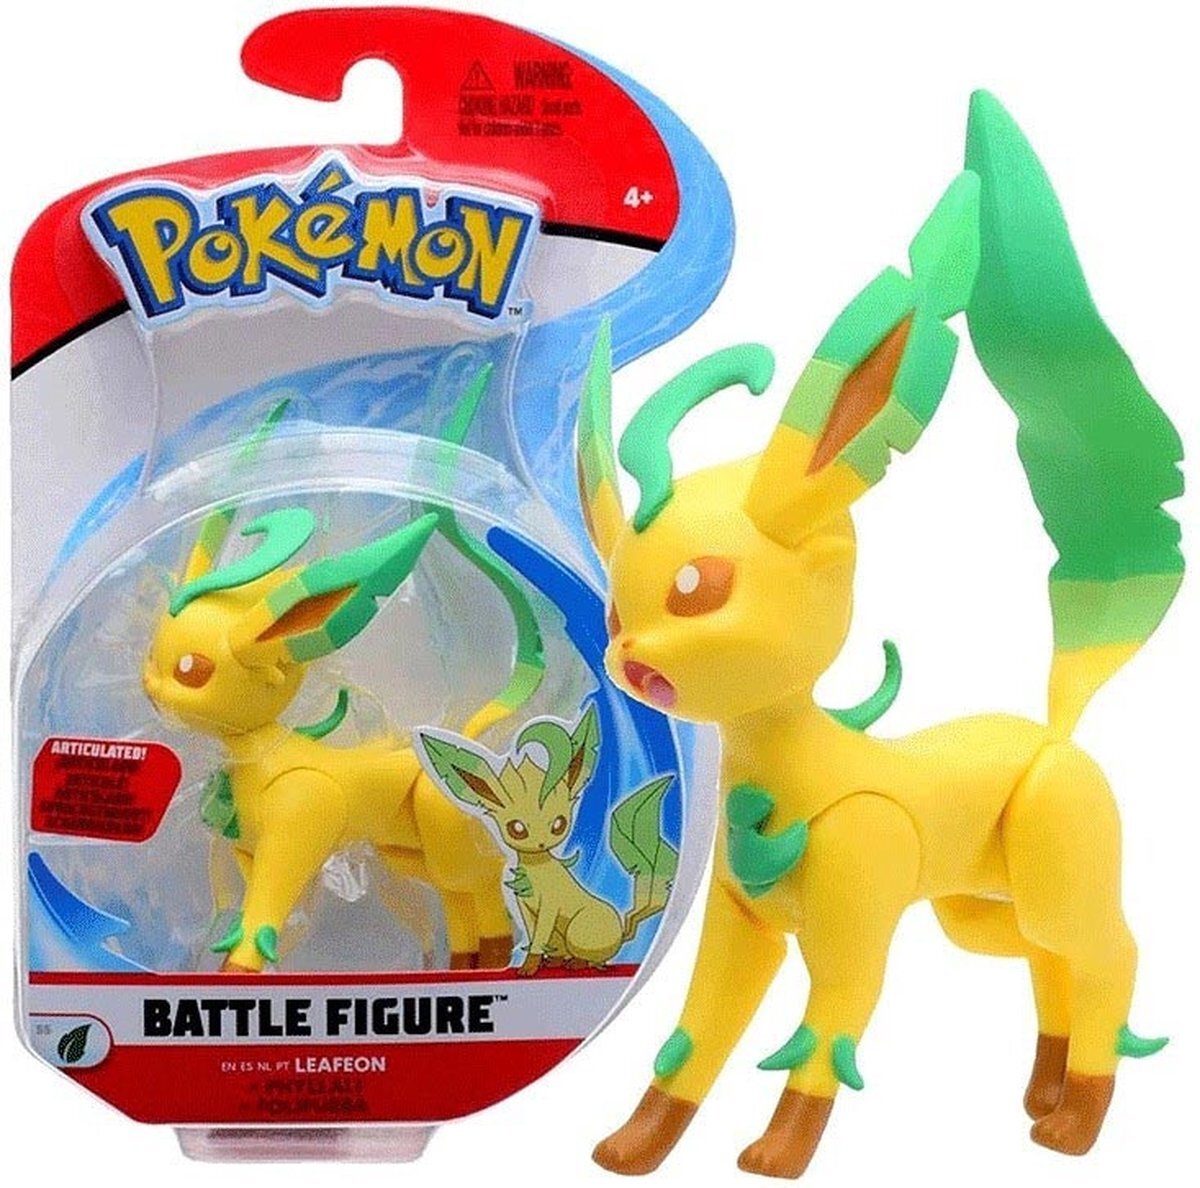 Pokémon Pokemon Battle Figure - Leafeon